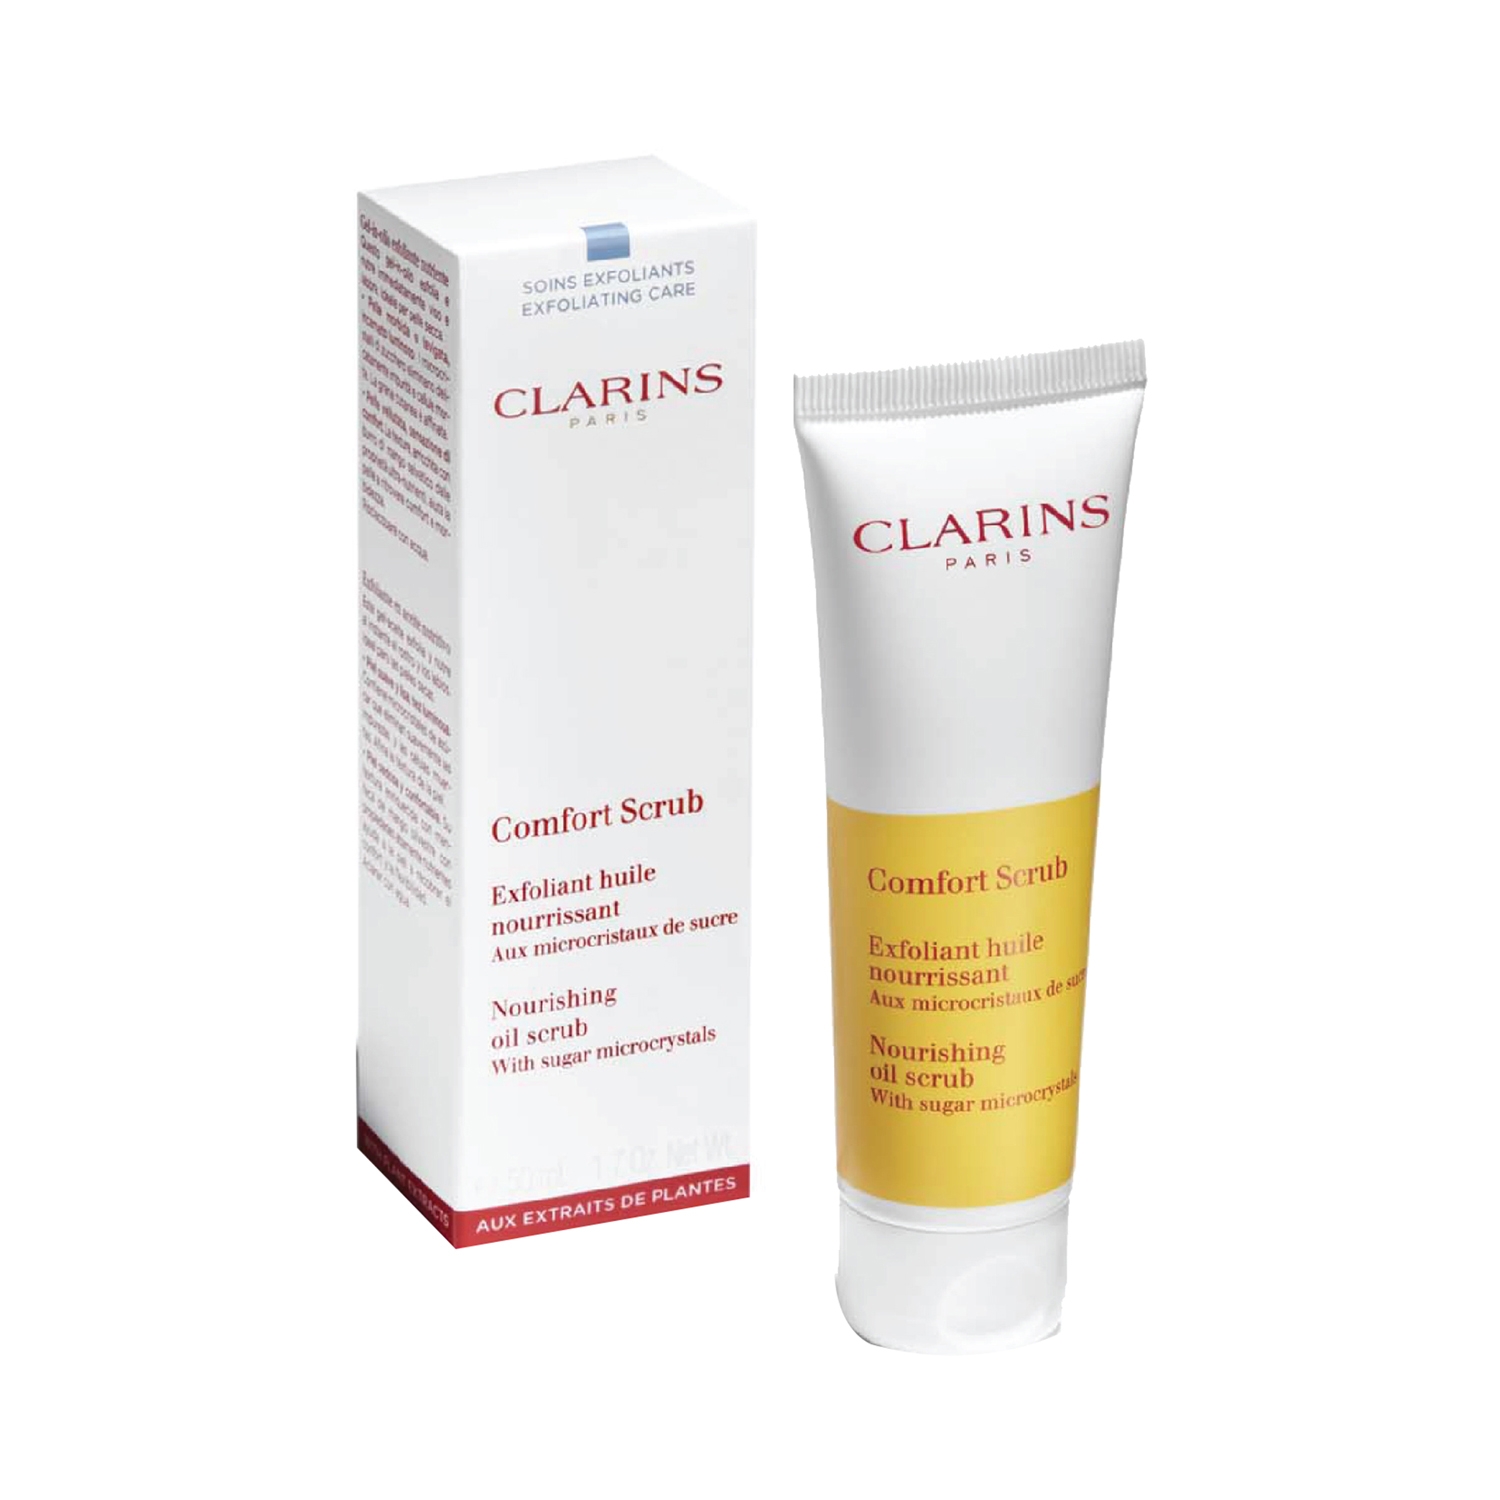 Clarins | Clarins Comfort Nourishing Oil Scrub (50ml)